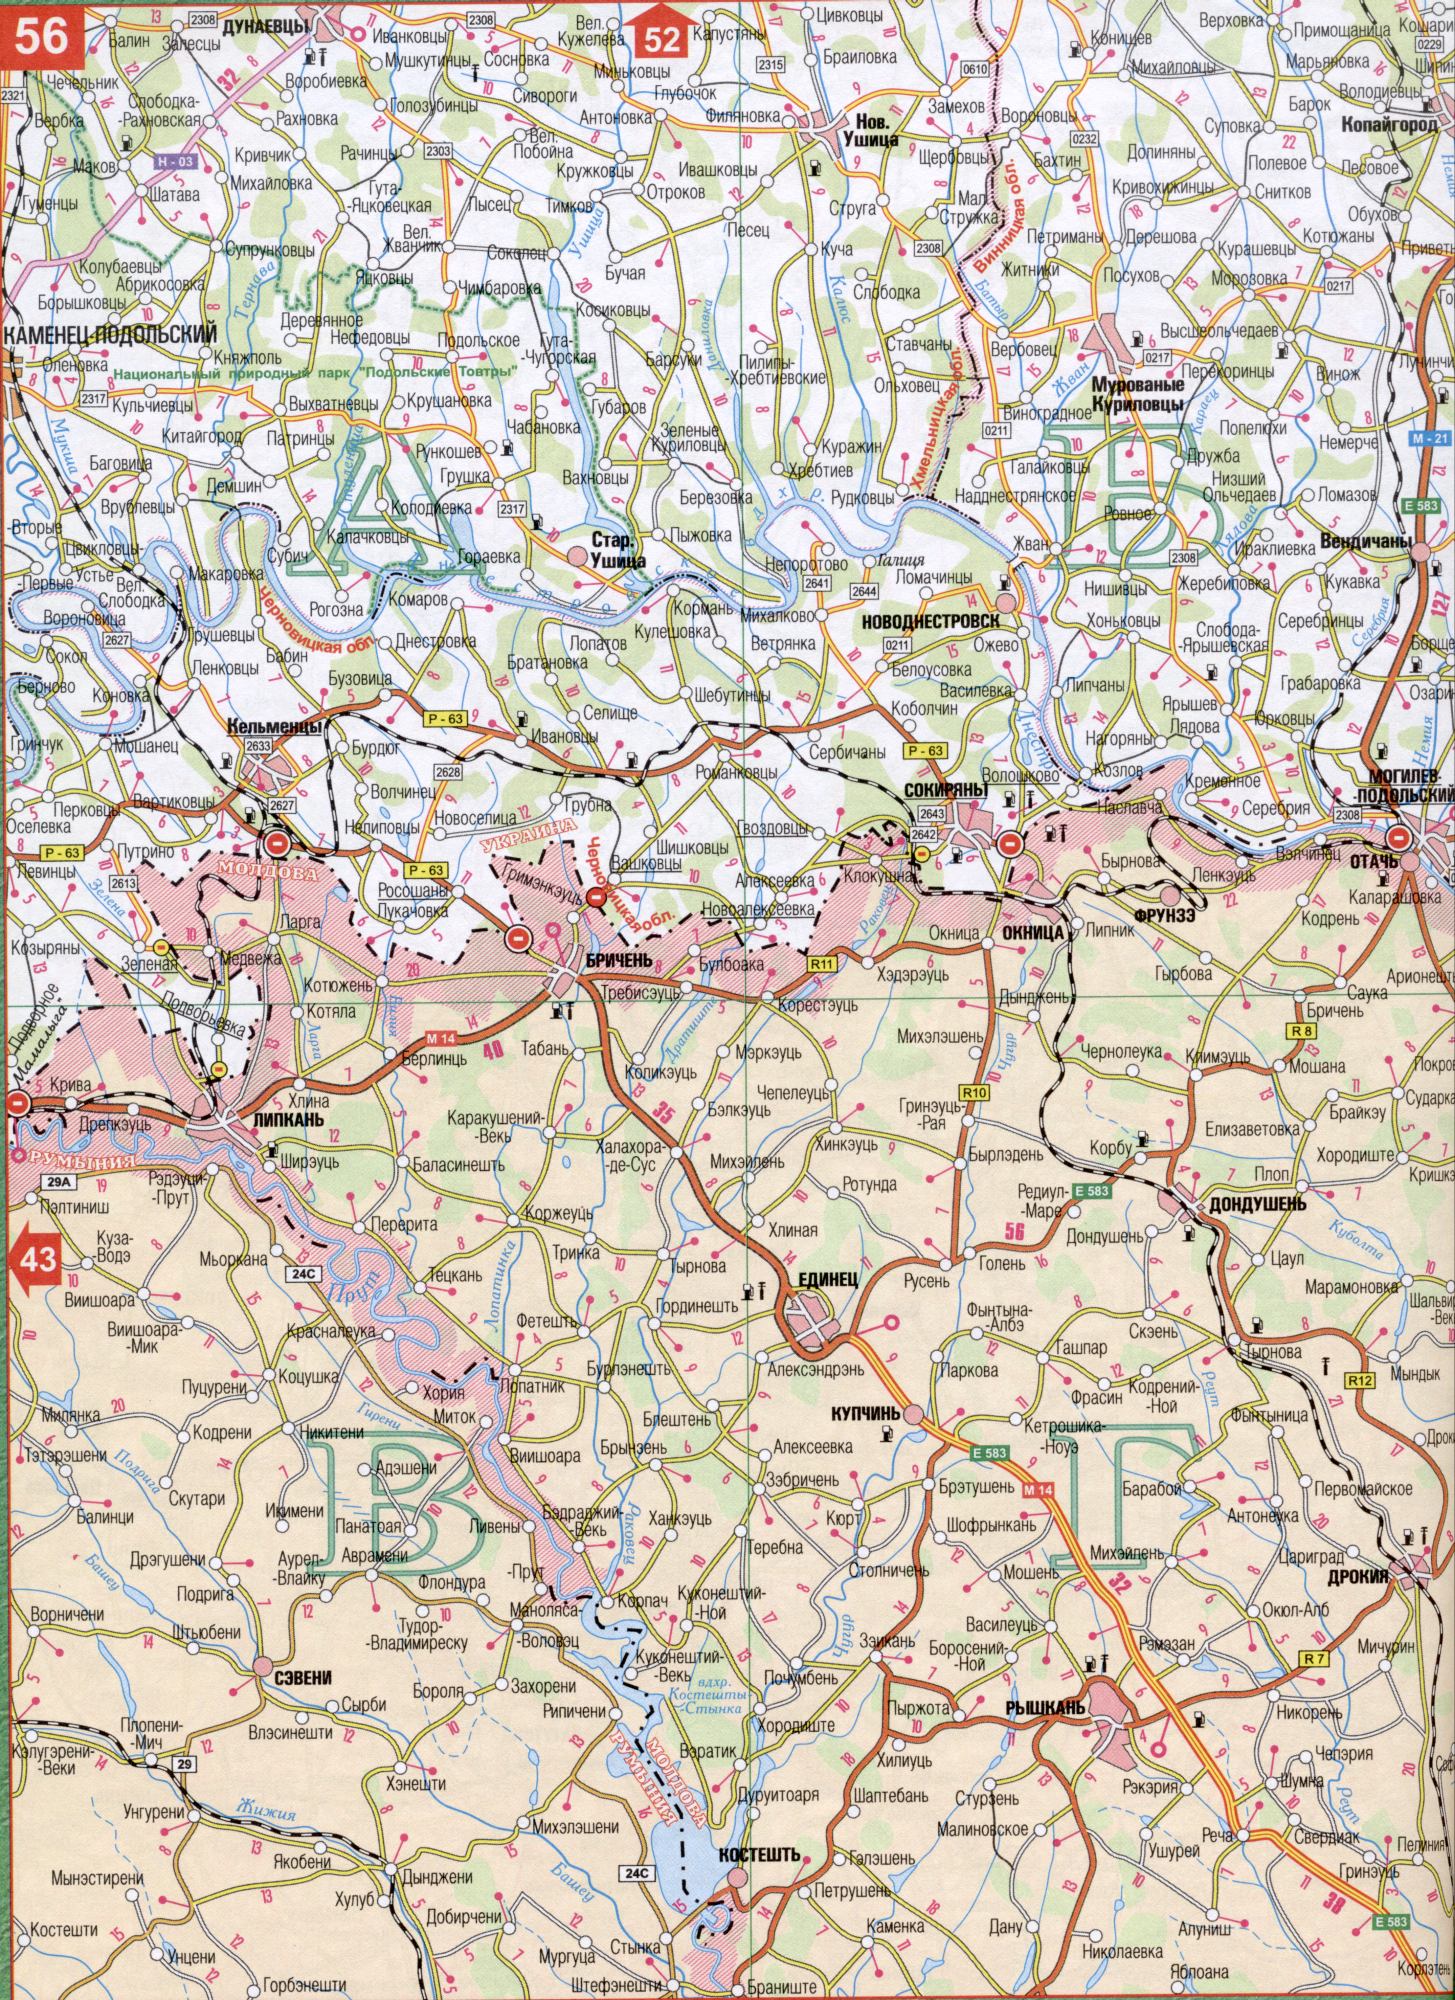 Karte von Winnyzja Region der Ukraine. Eine detaillierte Karte der Maßstab 1cm: 5000m Winnyzja Region. Frei, A1 - Kozlov, Serbichany, KITAYGOROD, Falke, Golozubintsy